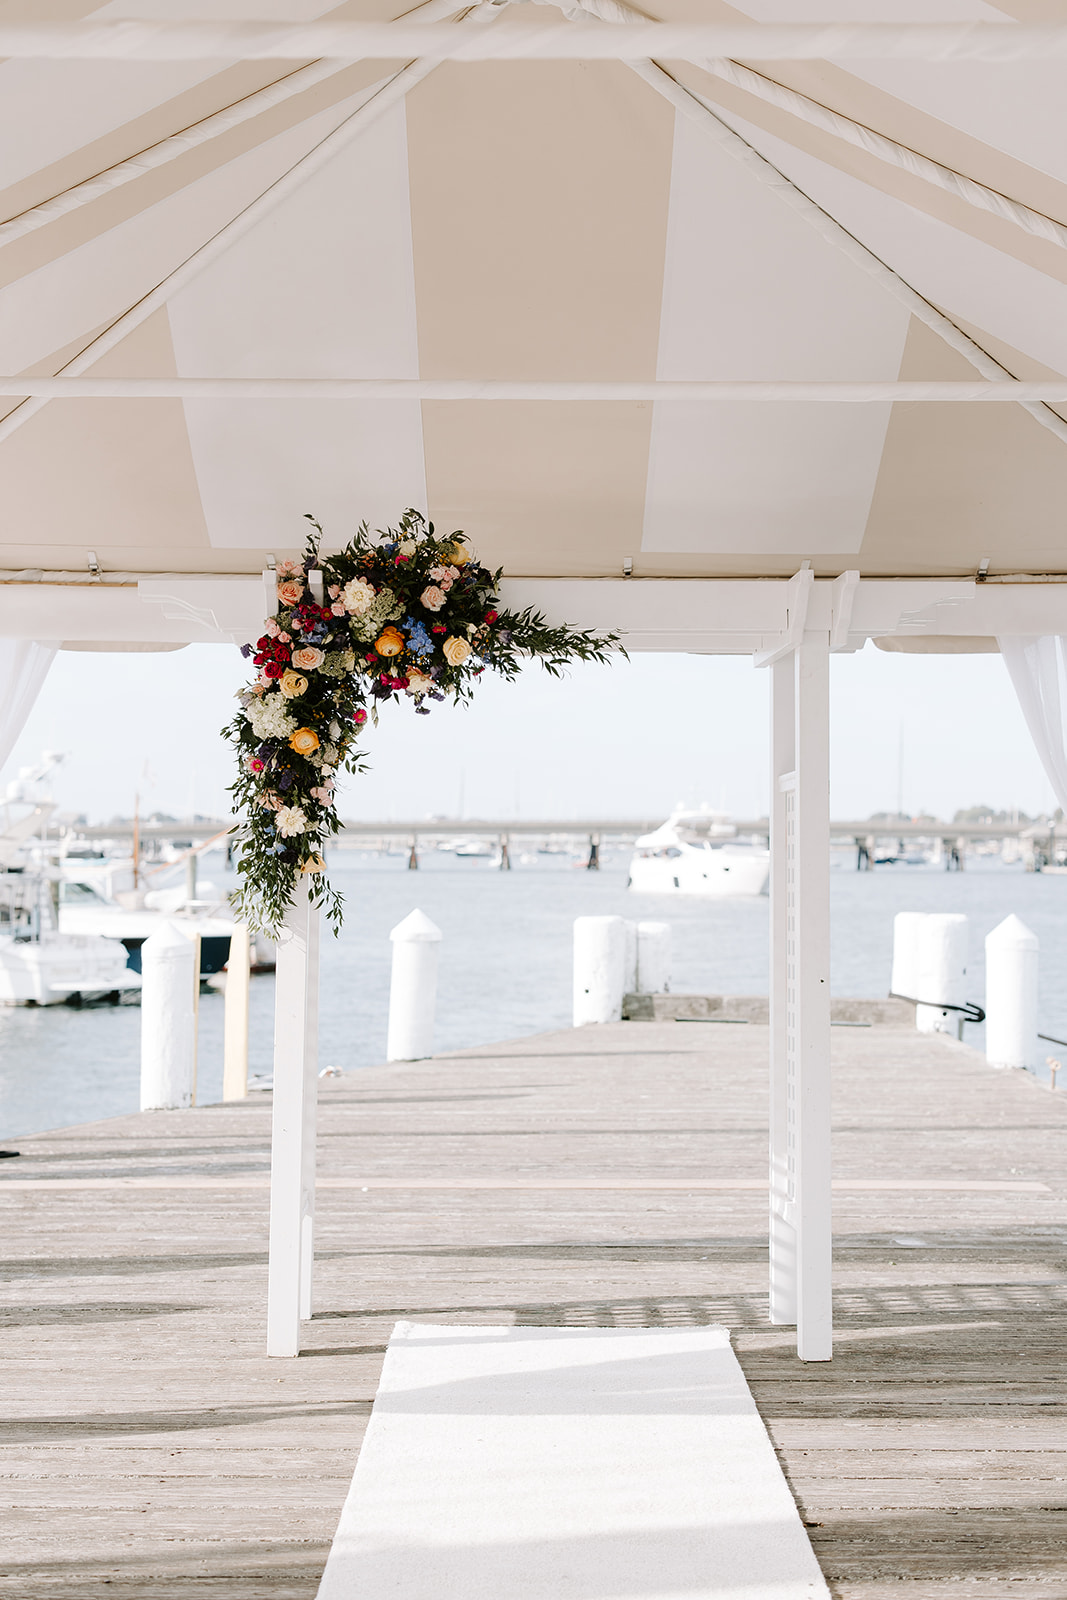 Stunning marina photo from a New England wedding venue